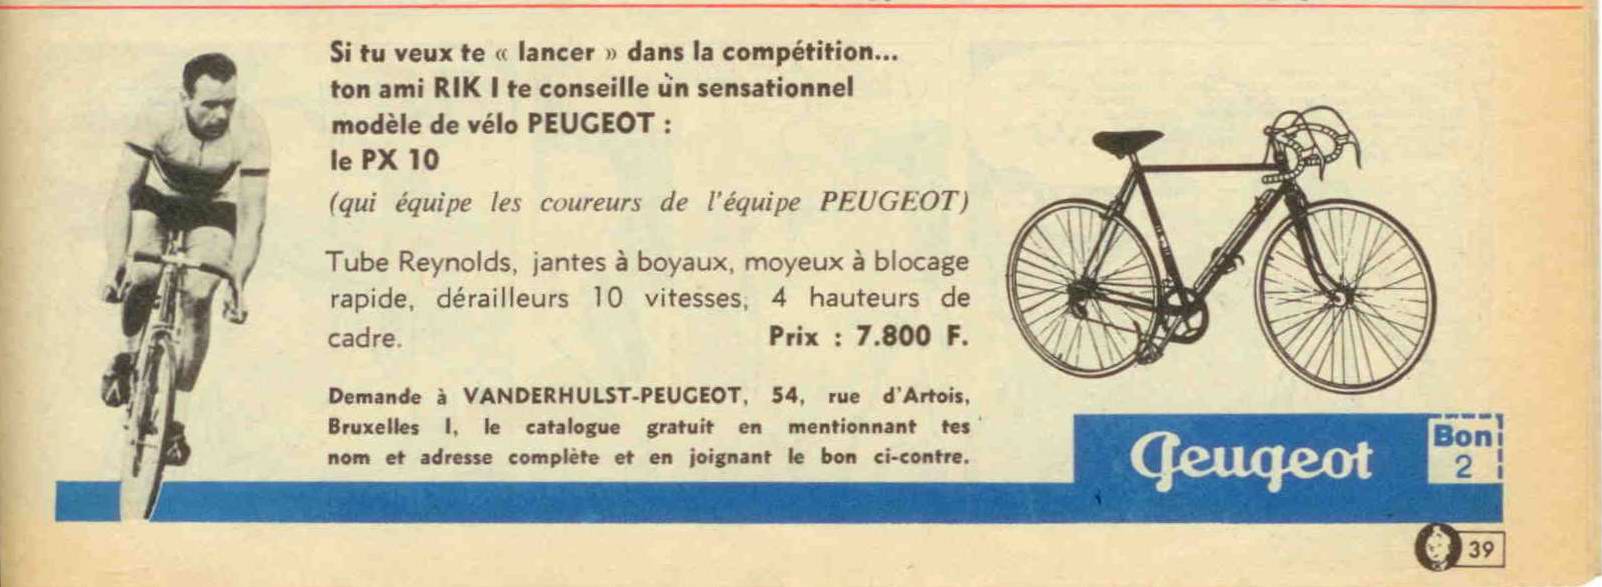 Peugeot_Pub_Tintin_1963.jpg